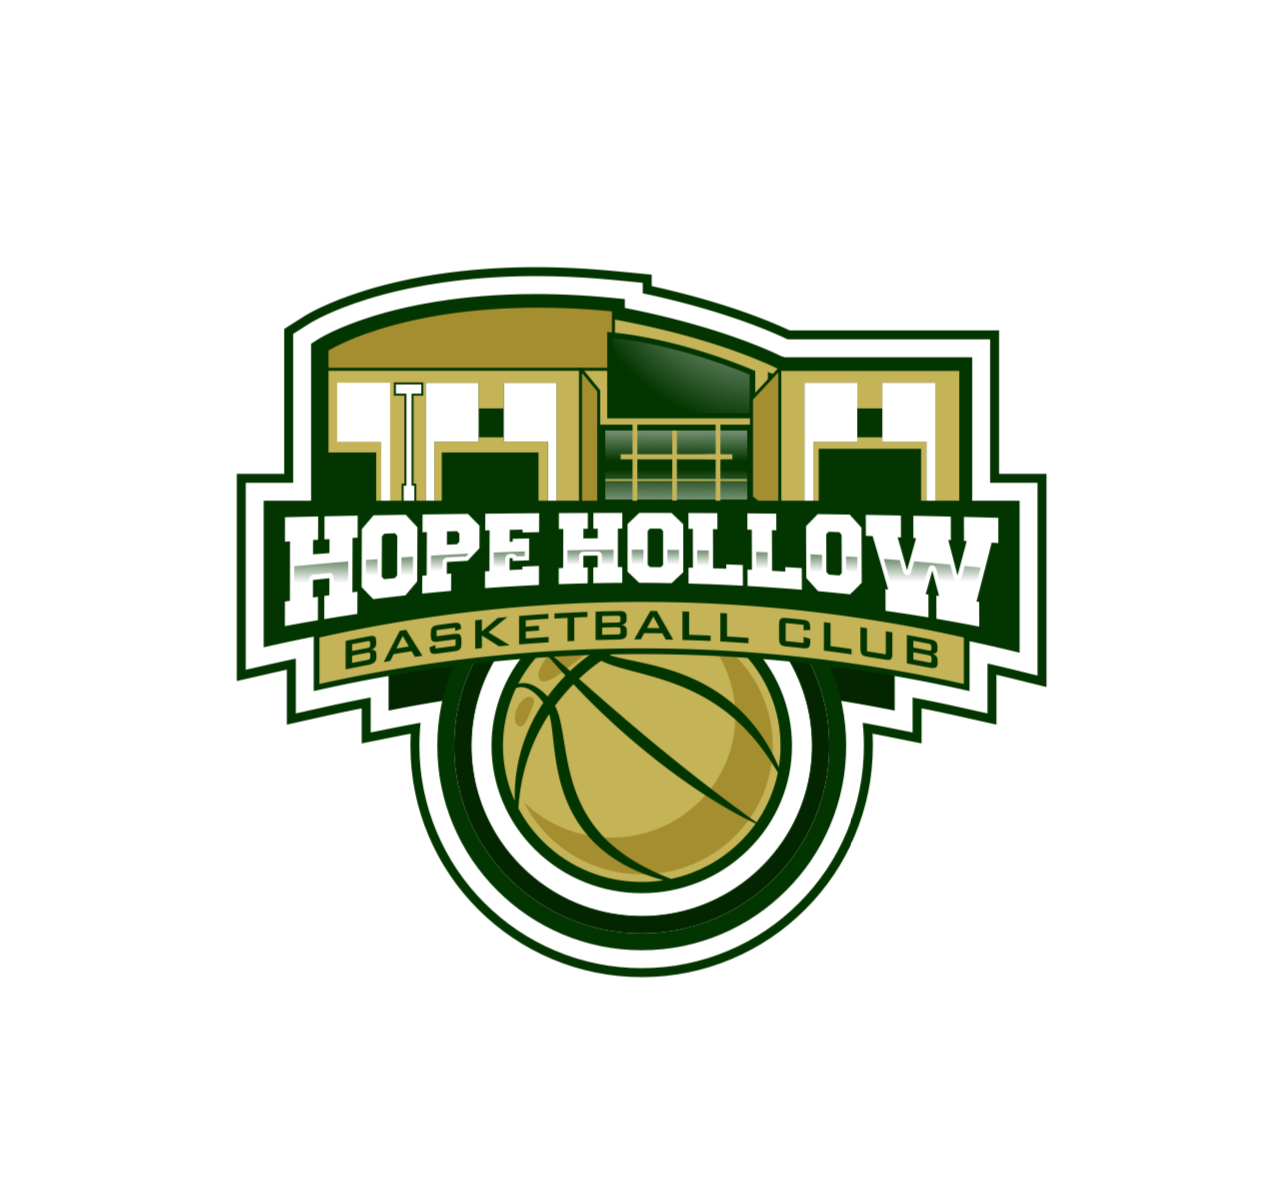 Hope Hollow Basketball Club